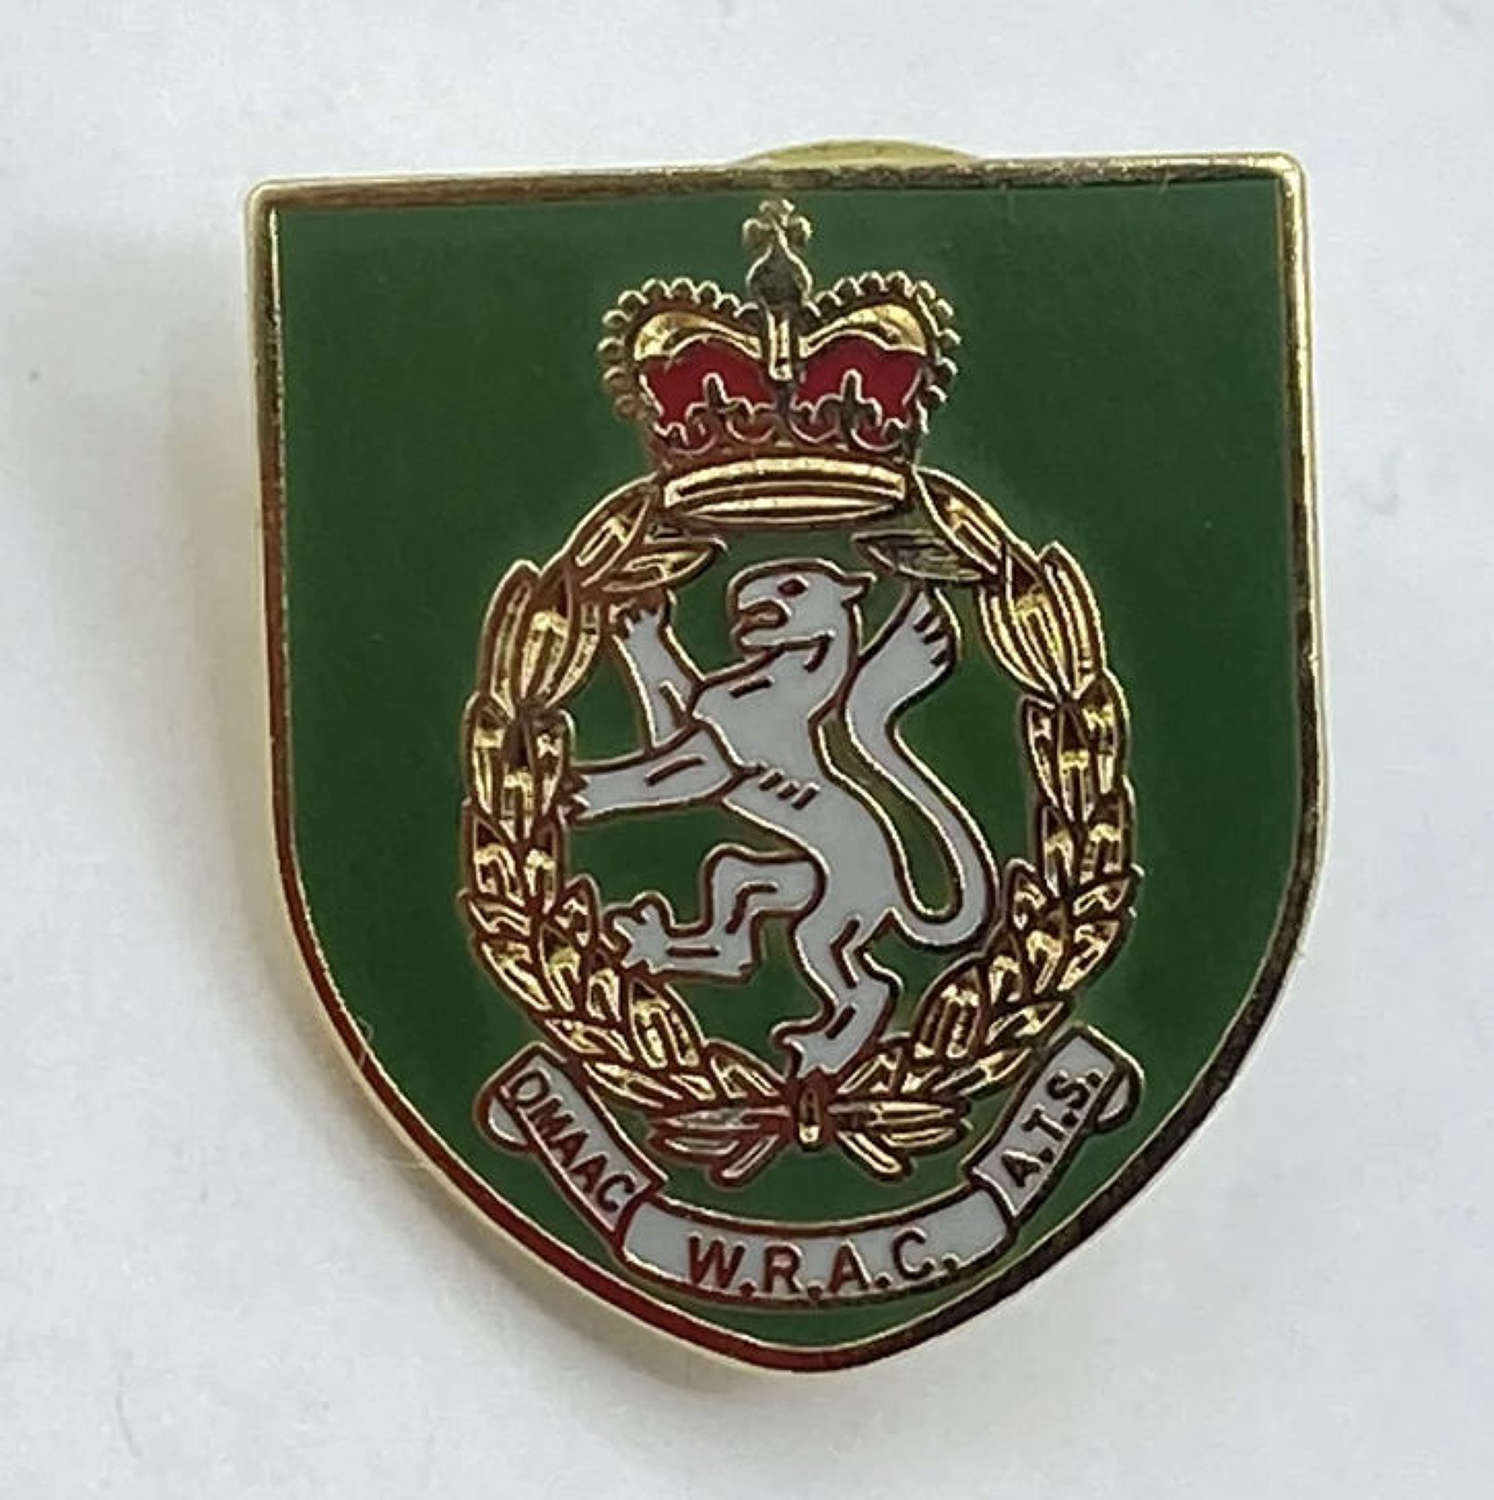 Vintage Omaac Wrac Ats Women's Royal Army Corps Military Badge